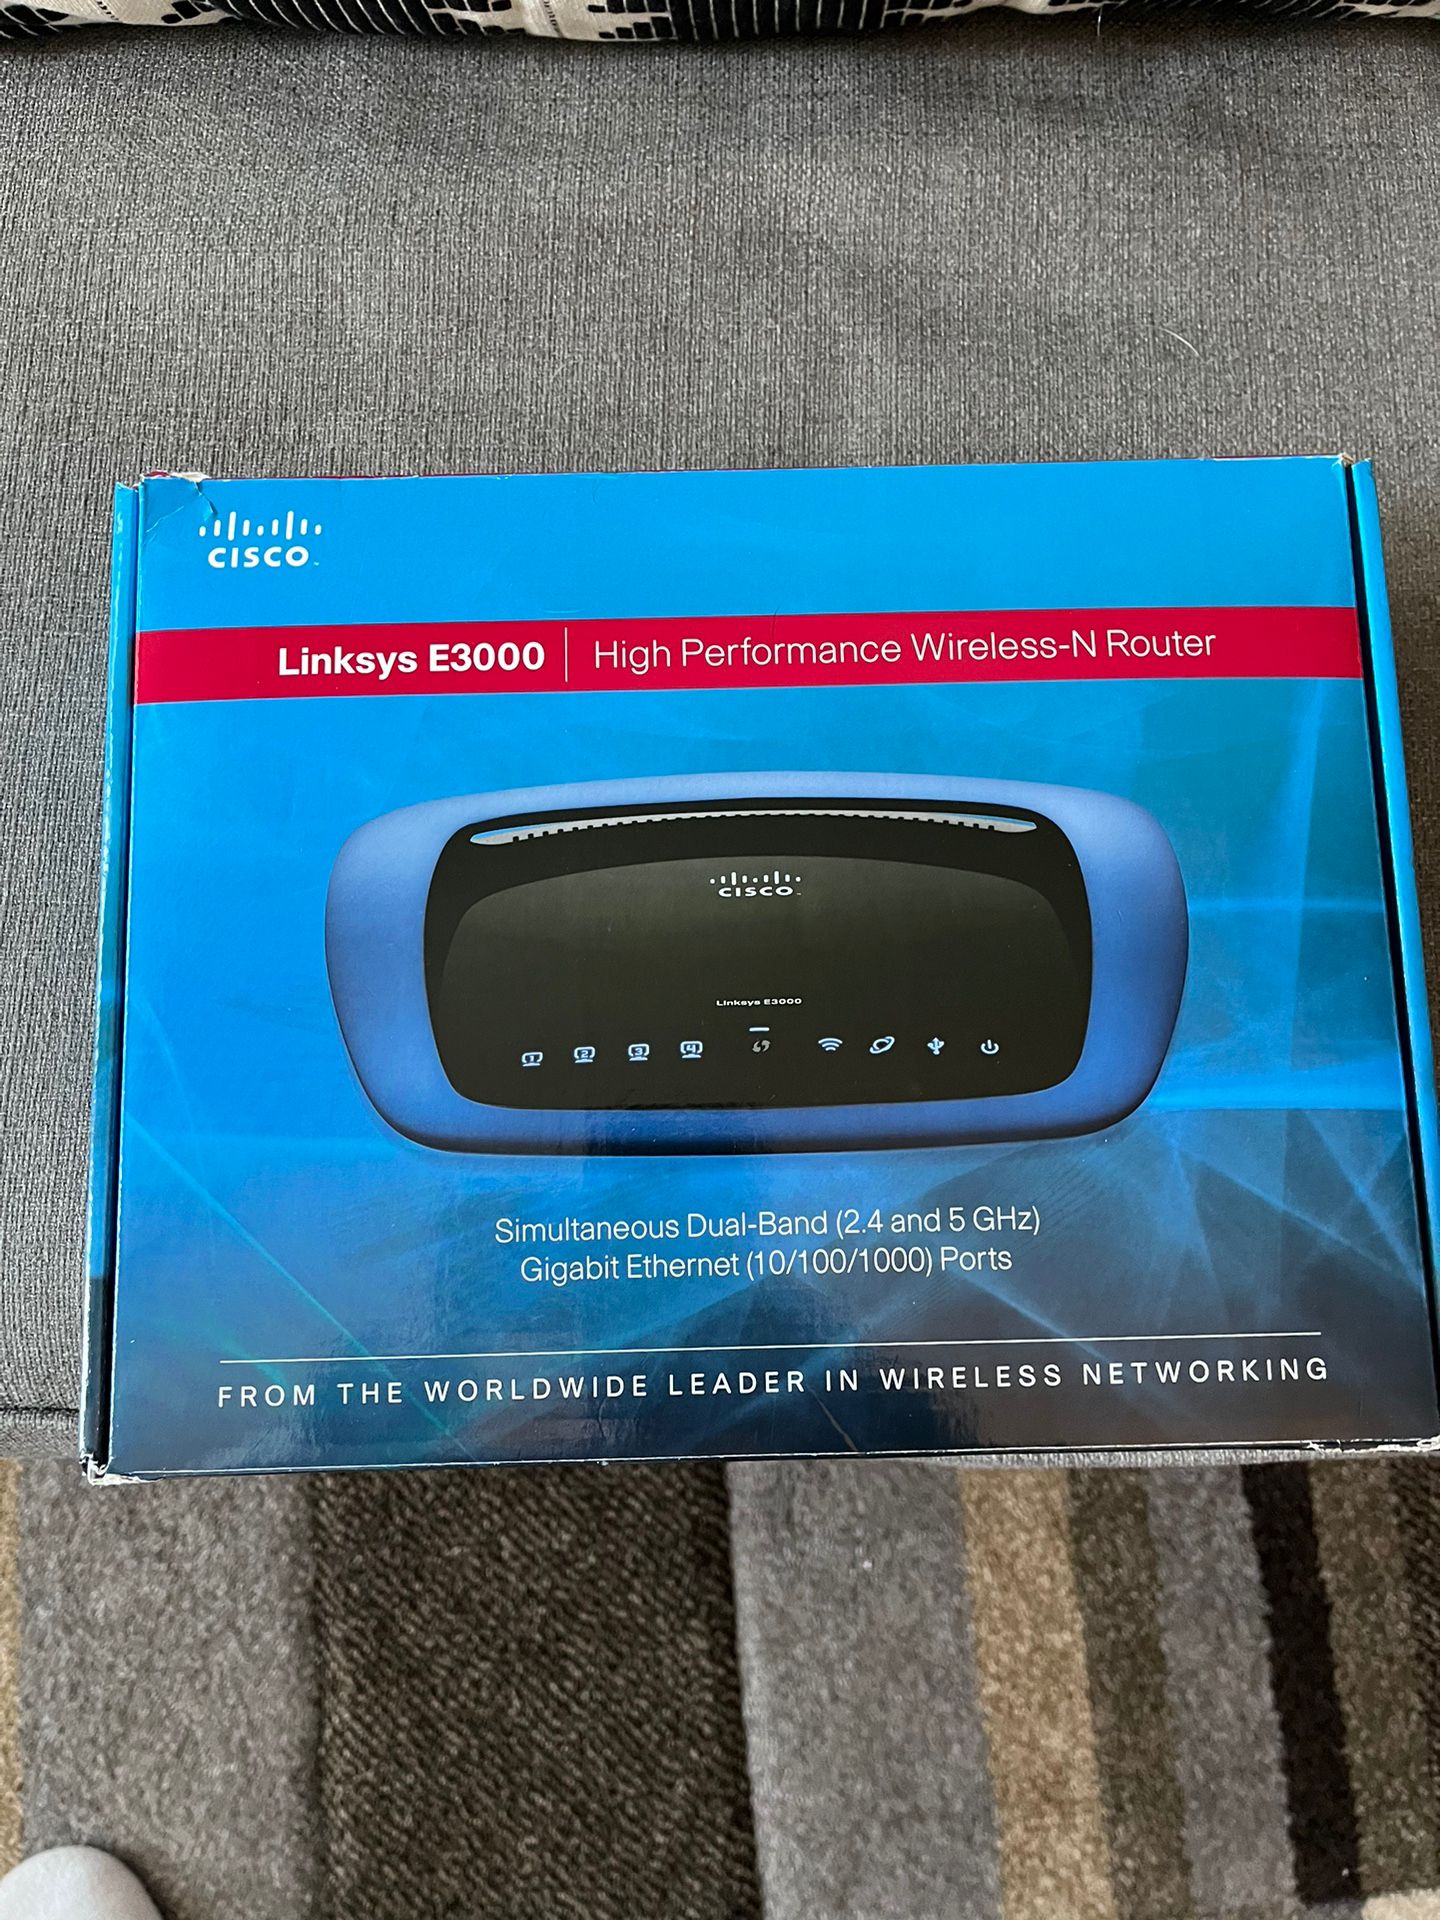 Wireless Router - Linksys E3000 - Cisco